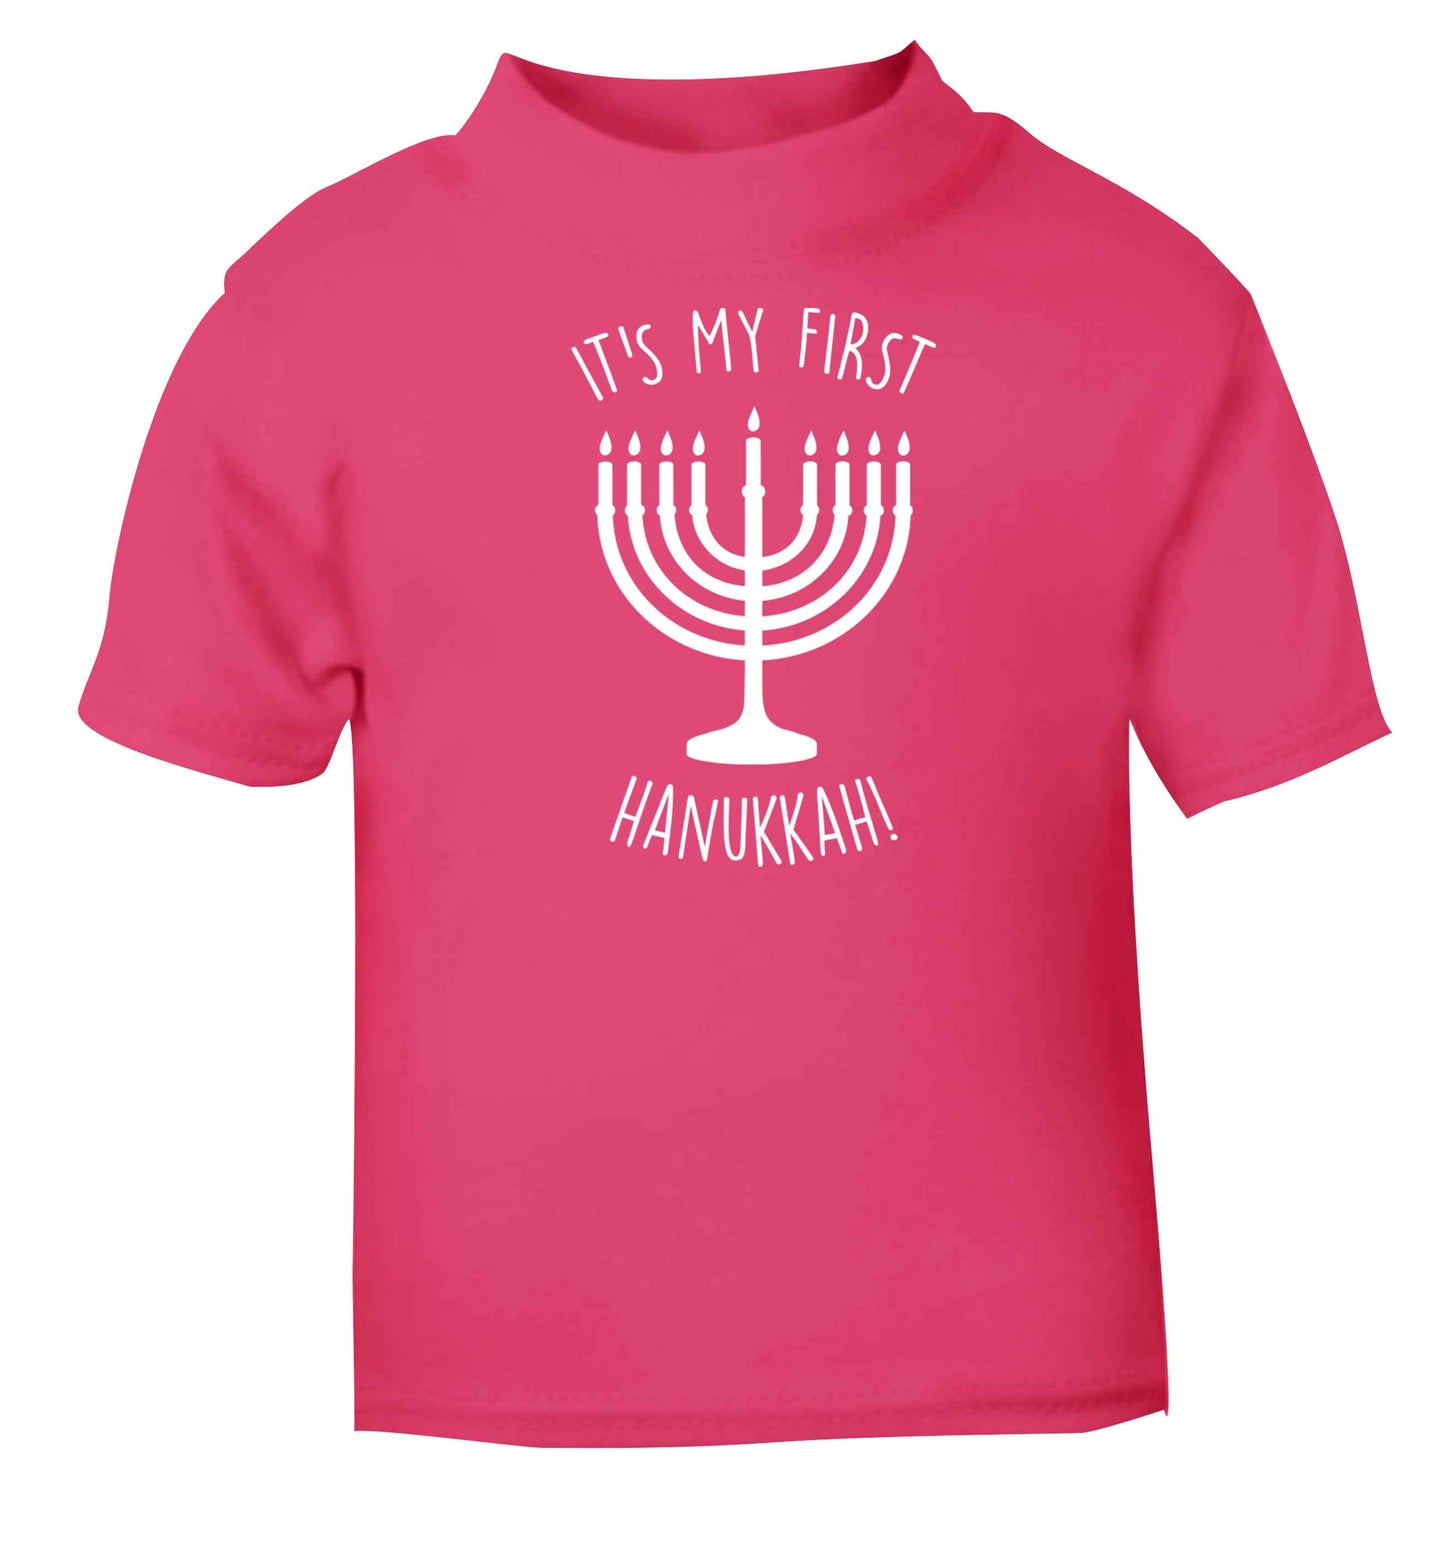 It's my first hanukkah pink baby toddler Tshirt 2 Years